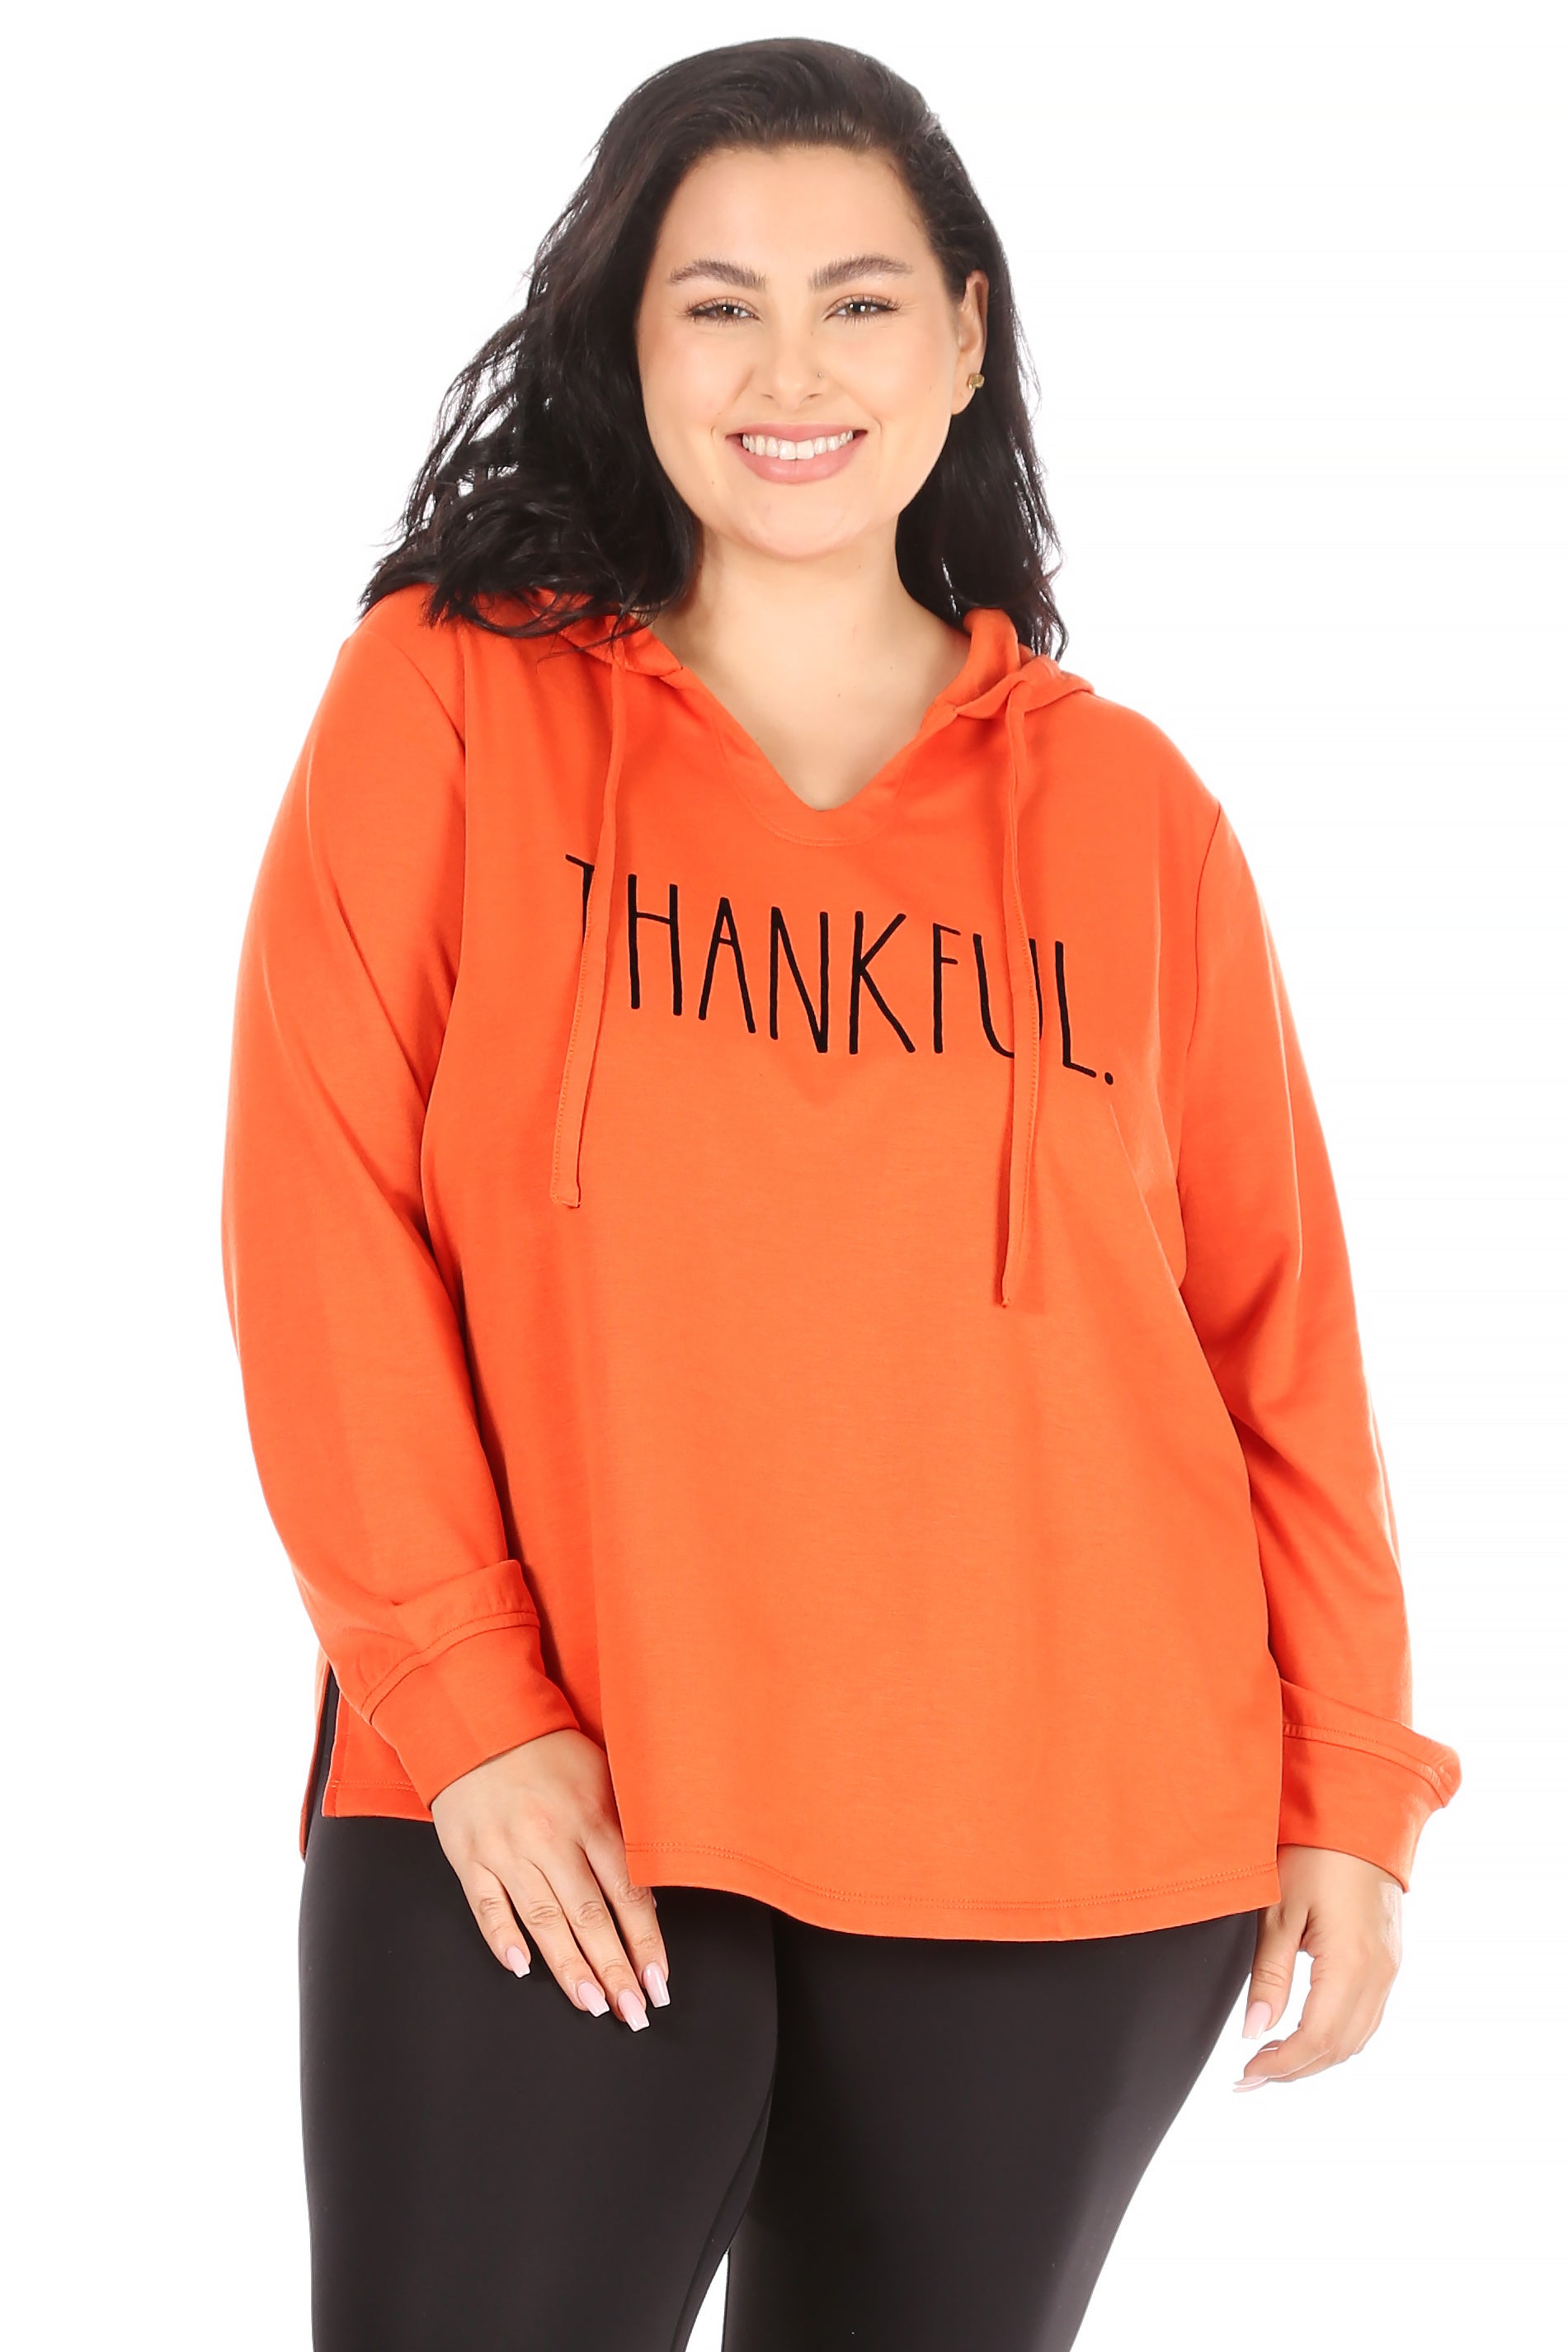 Women's "THANKFUL" Plus Size Pullover Lounge Hoodie - Rae Dunn Wear